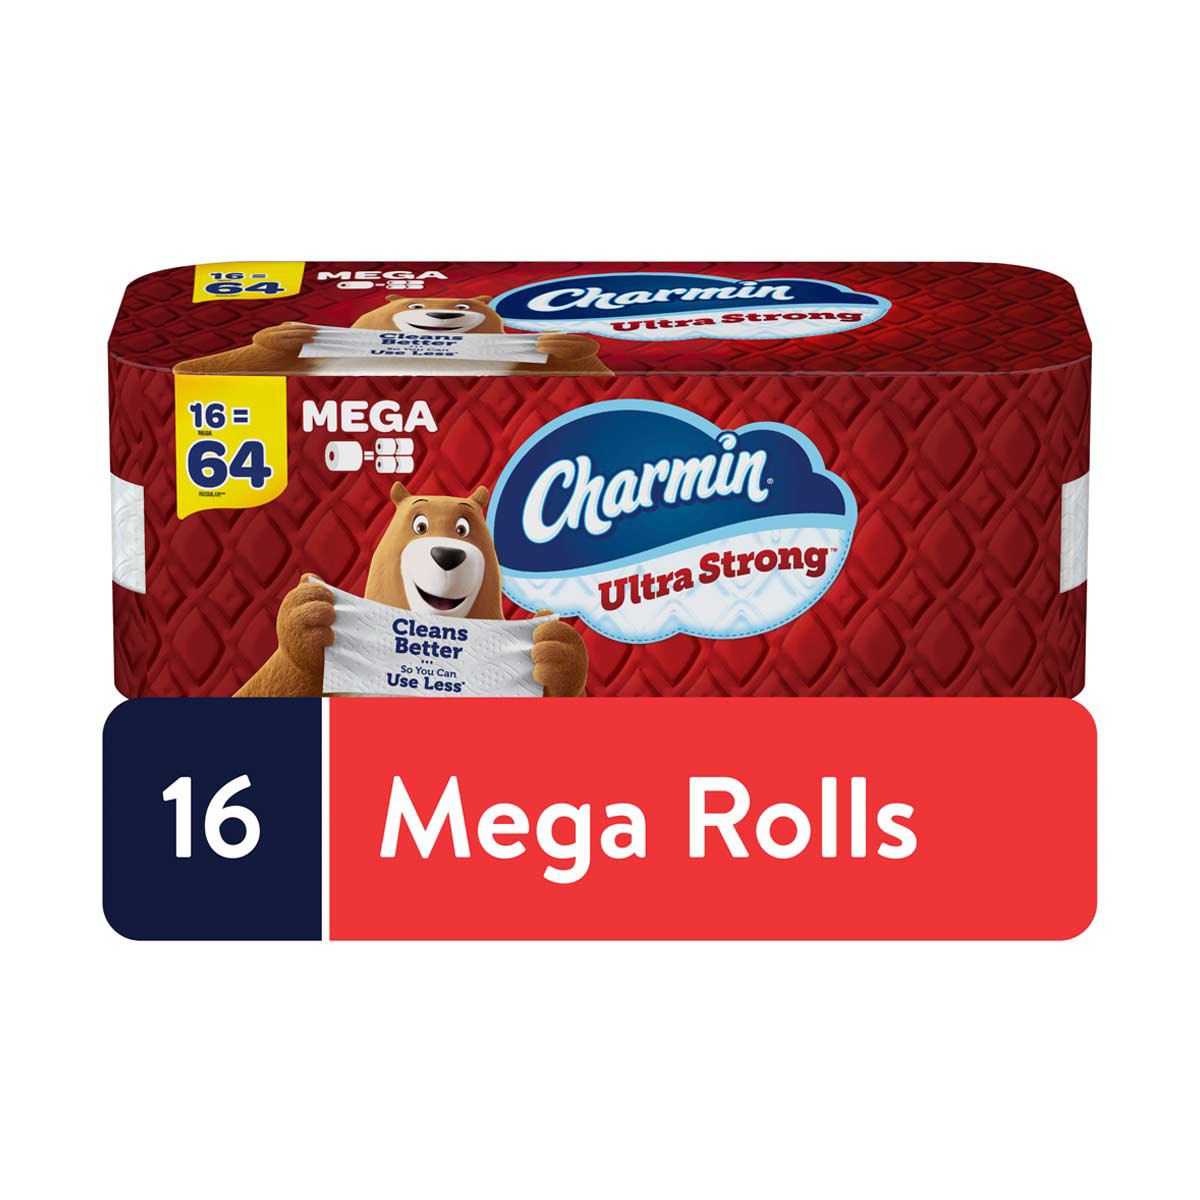 Charmin Ultra Strong Toilet Paper 16 Mega Rolls, 242 Sheets Per Roll